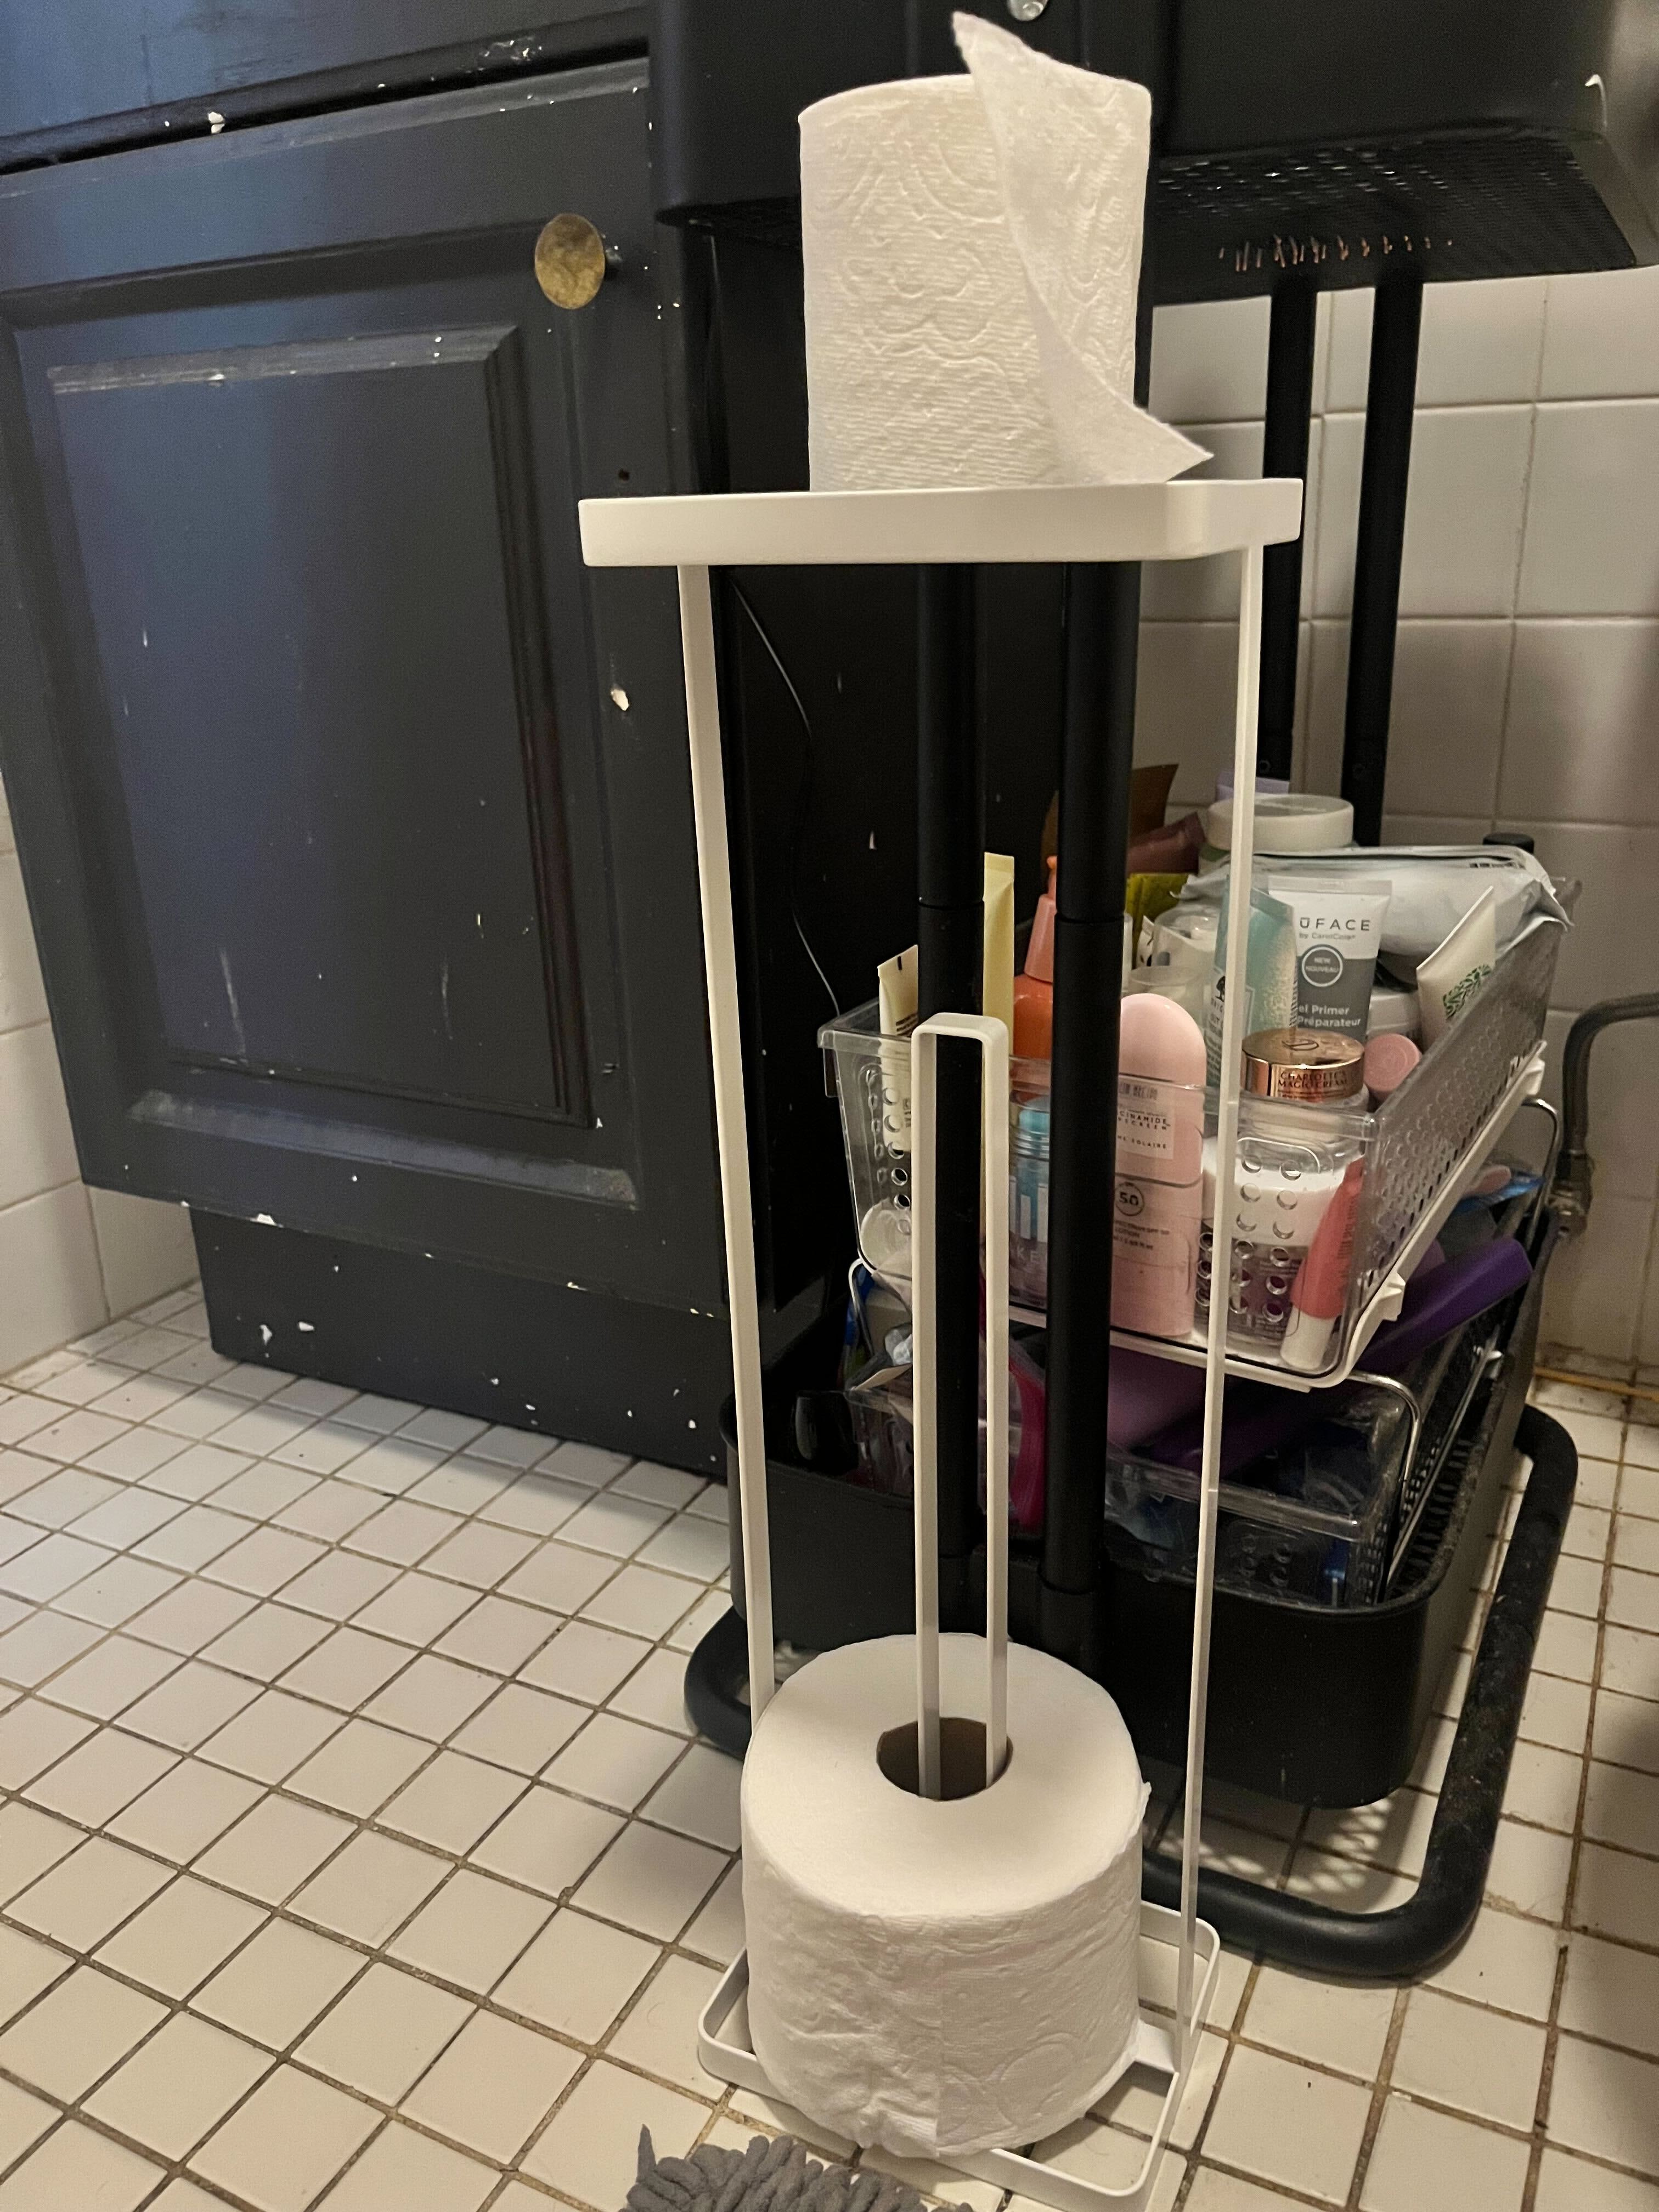 https://cdn.apartmenttherapy.info/image/upload/v1694549725/at/yamazaki-tower-toilet-paper-stand-LL-AK.jpg